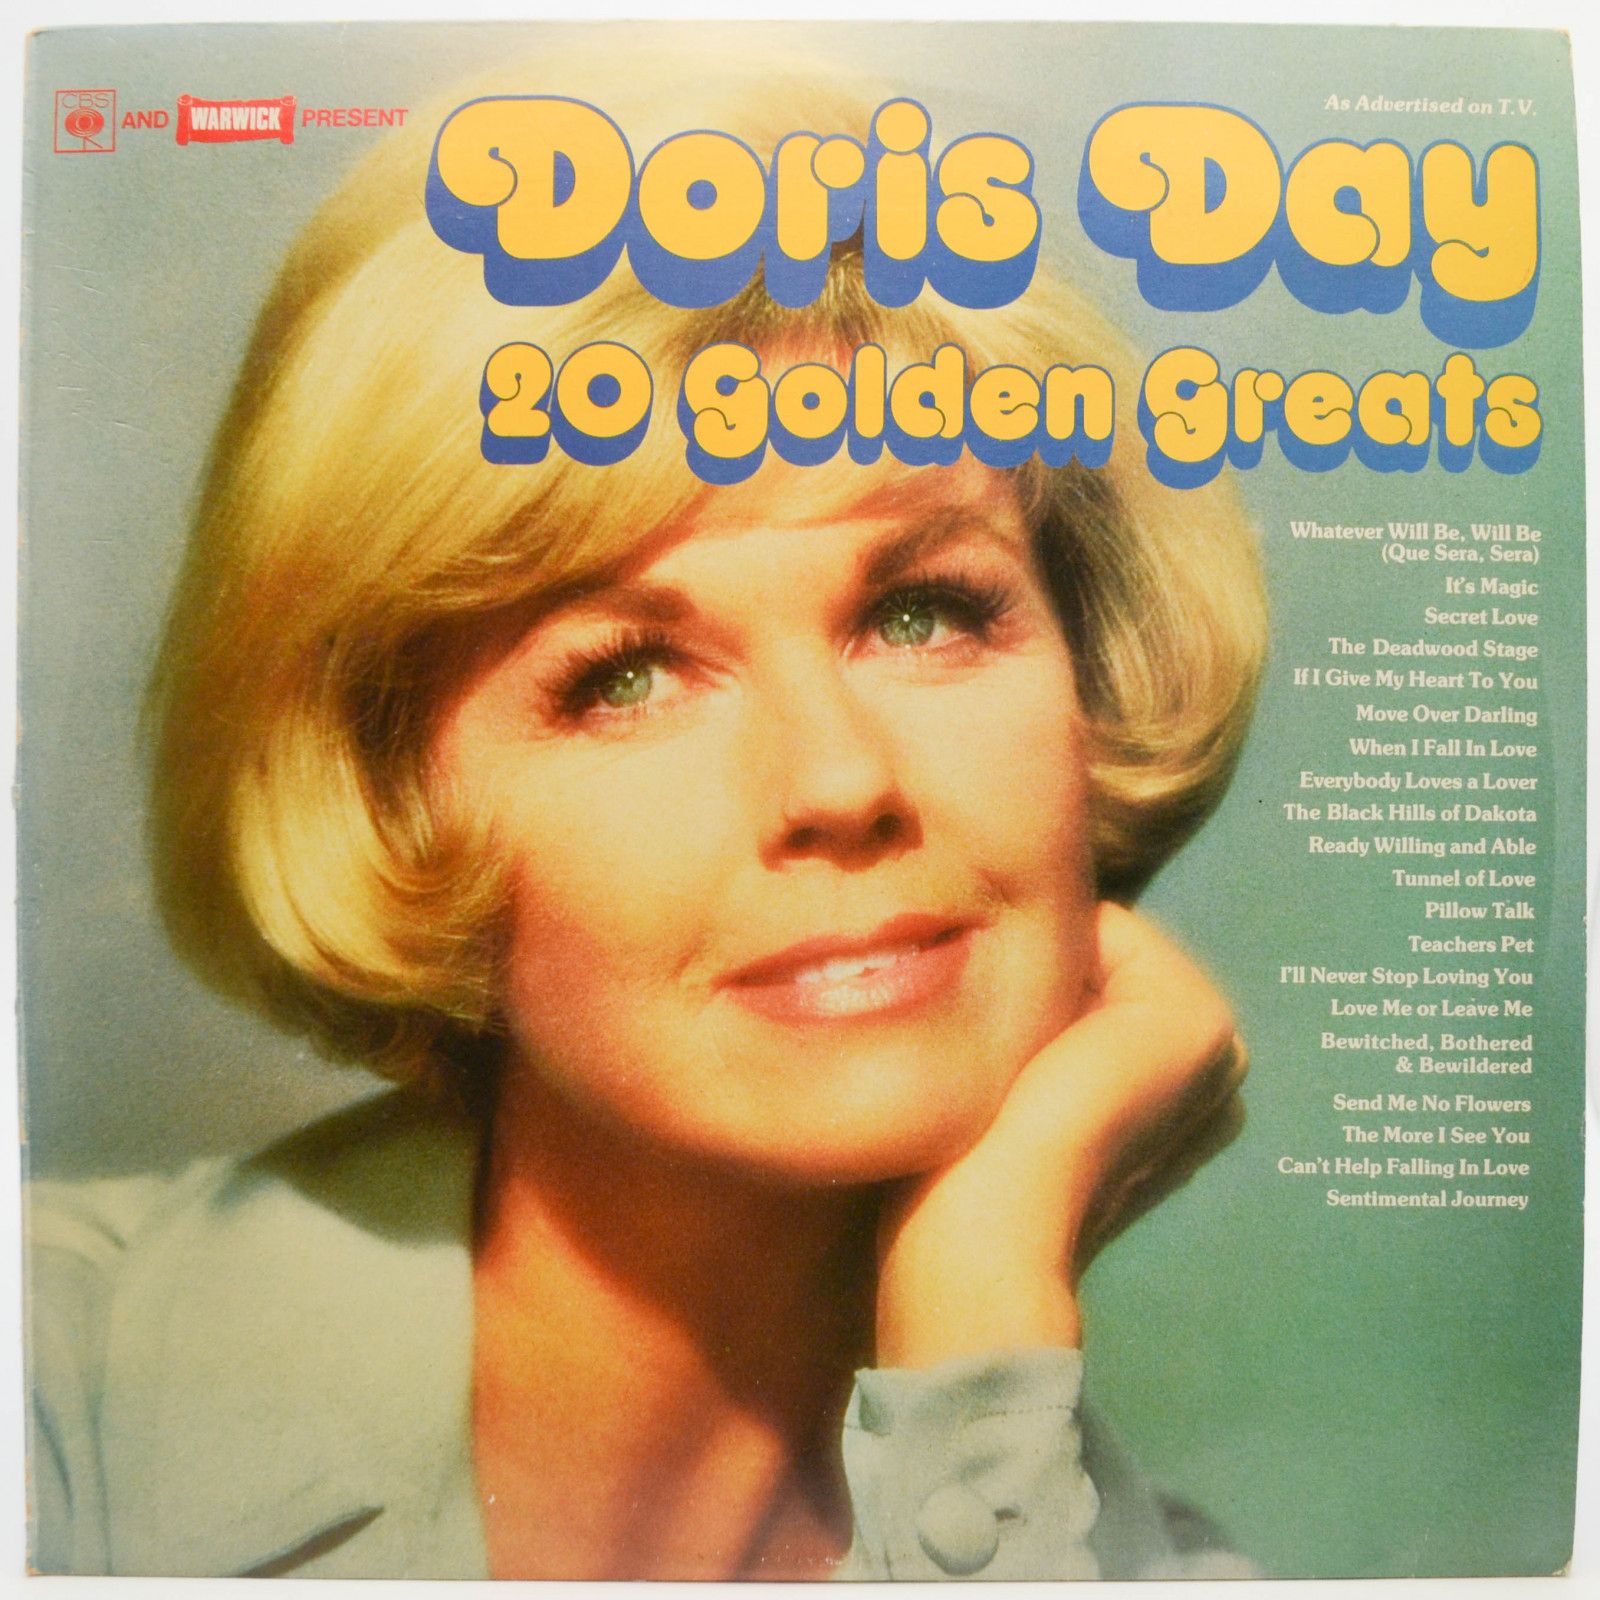 Doris Day — 20 Golden Greats (UK), 1978